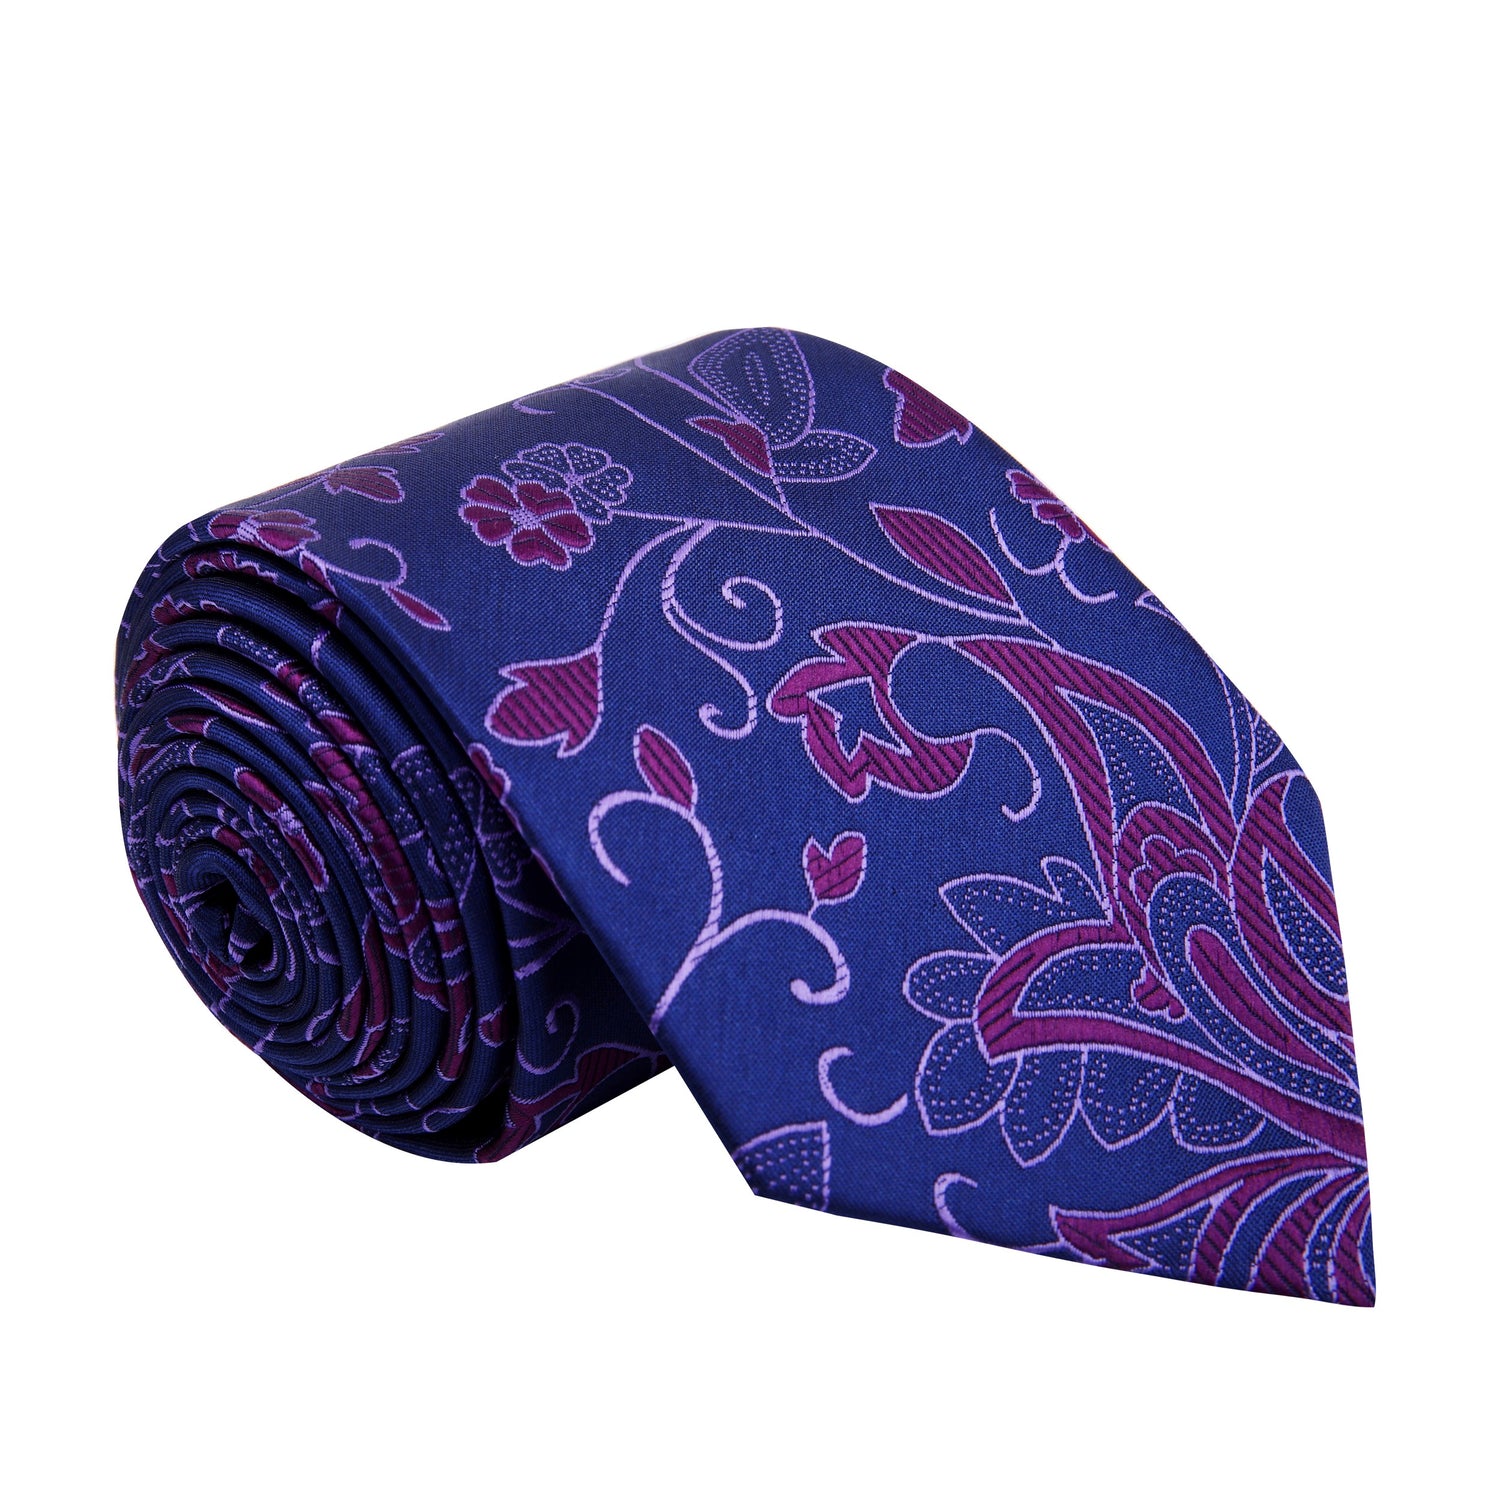 A Purple, Royal Floral Pattern Silk Necktie, Matching Pocket Square